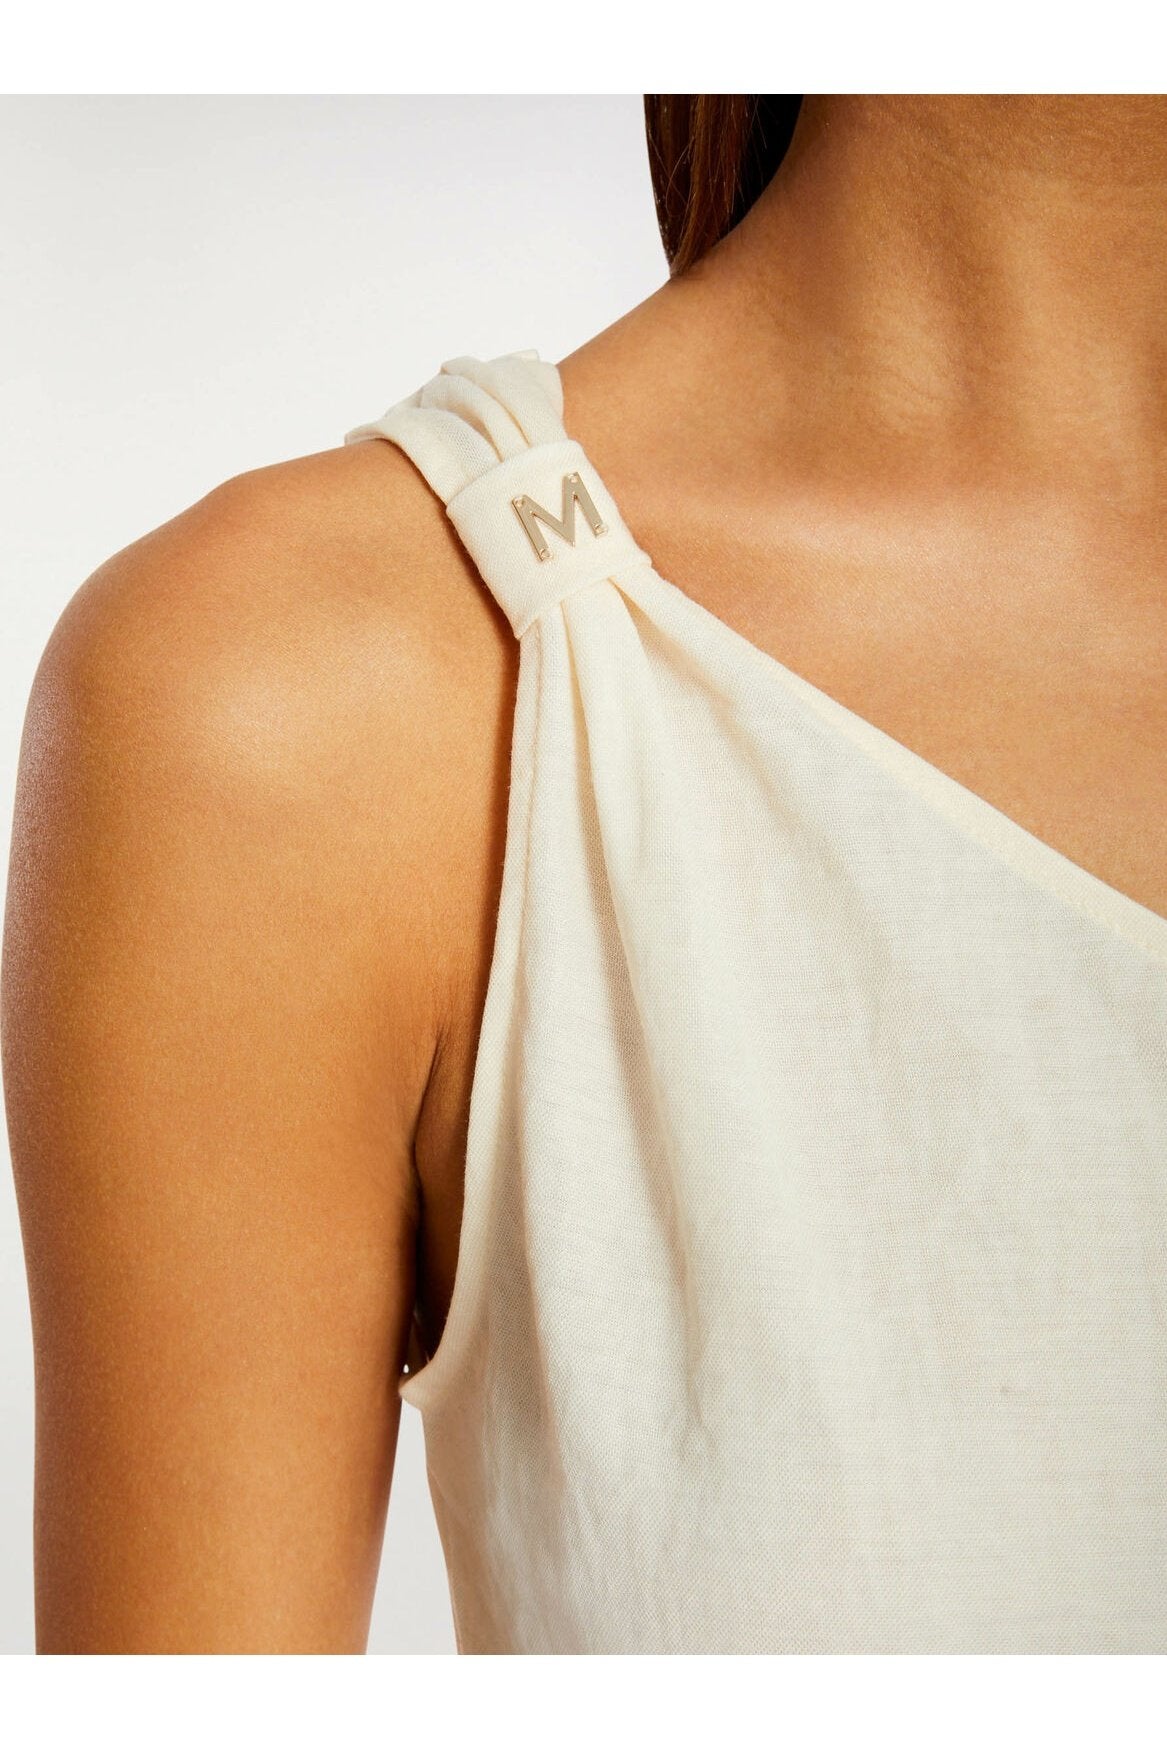 MORGAN - גופיה א-סימטרית בצבע OFF WHITE לנשים - MASHBIR//365